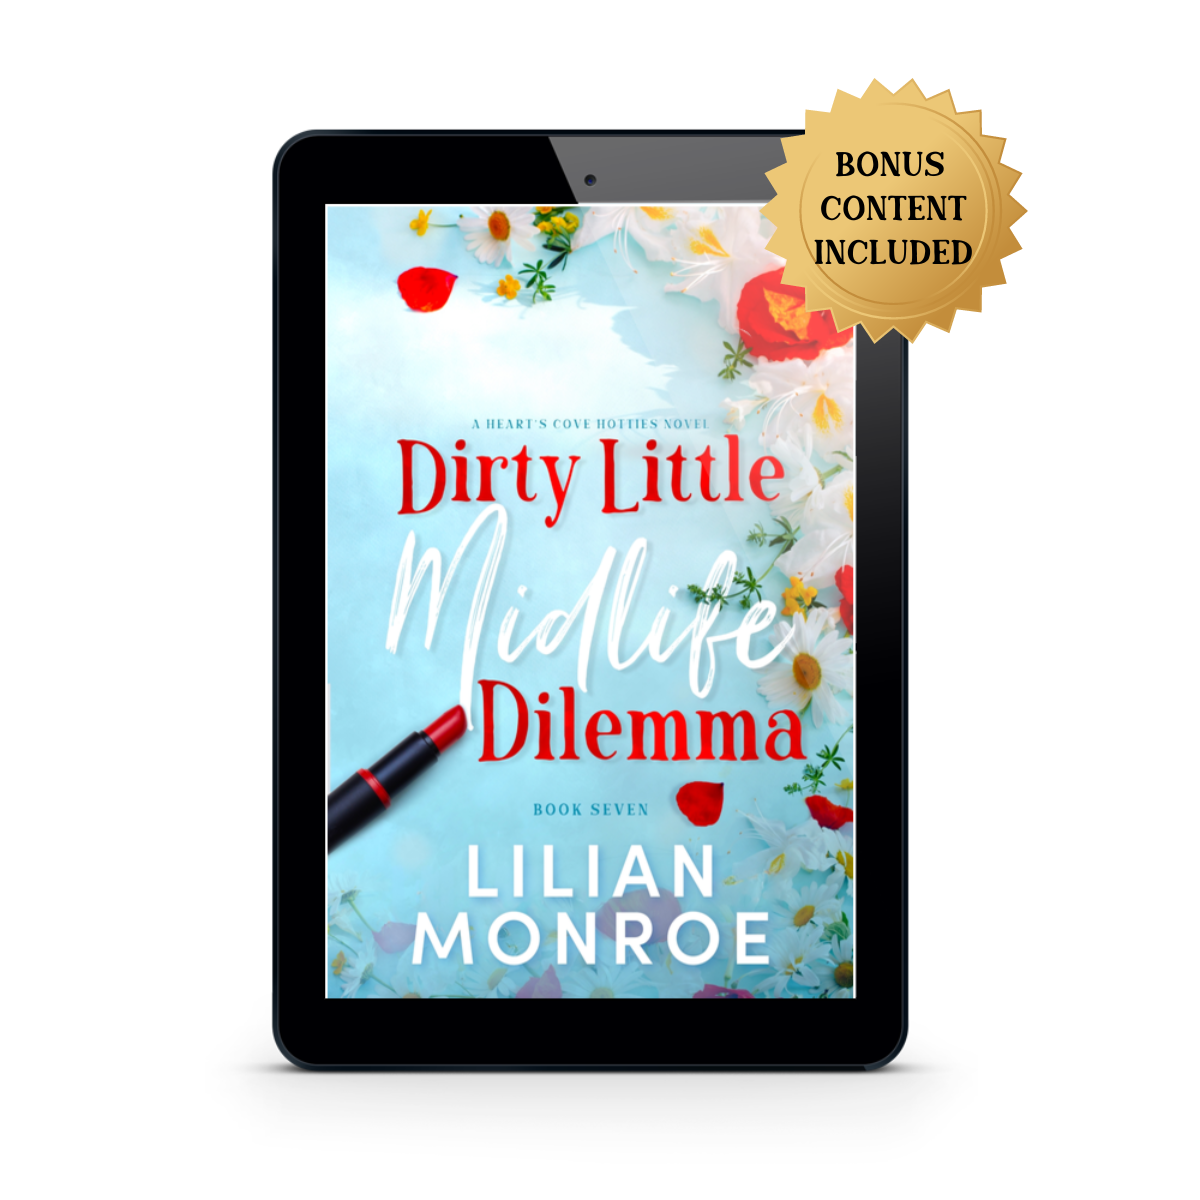 Heart's Cove Hotties Book 7: Dirty Little Midlife Dilemma